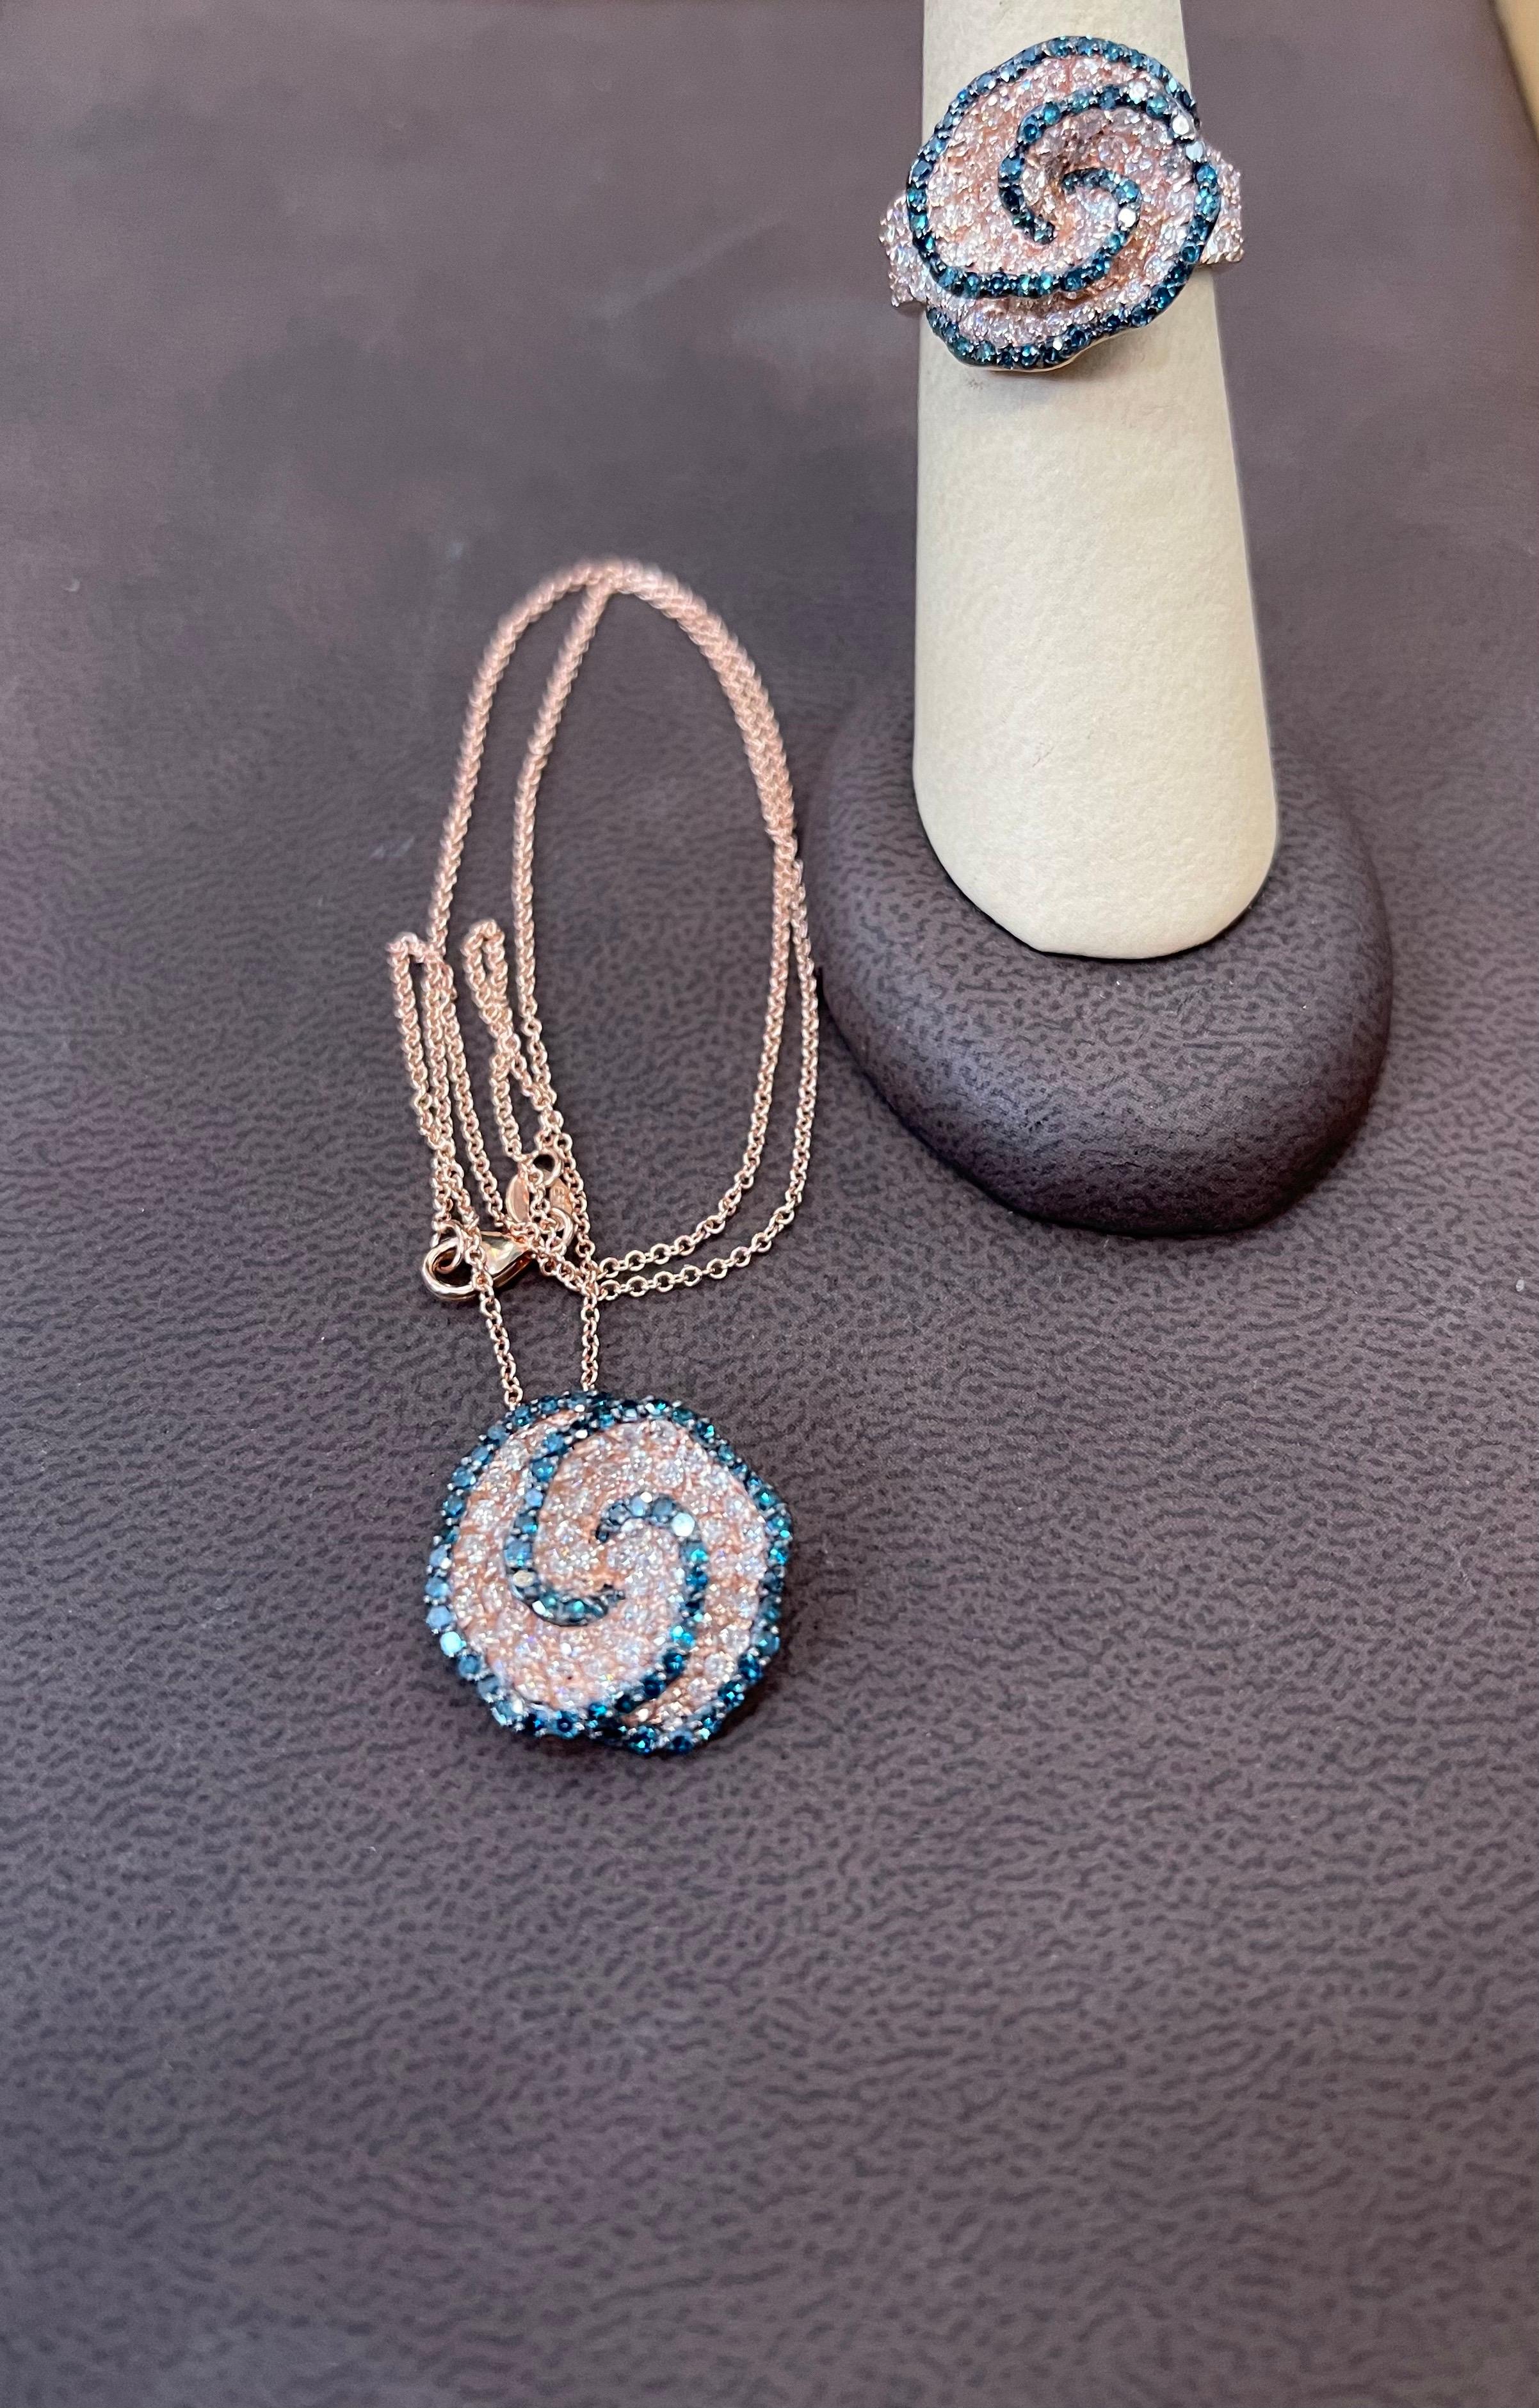 Designer Effy's Blue and White Diamond Celtic Pendant /Necklace 14 Karat Gold 2